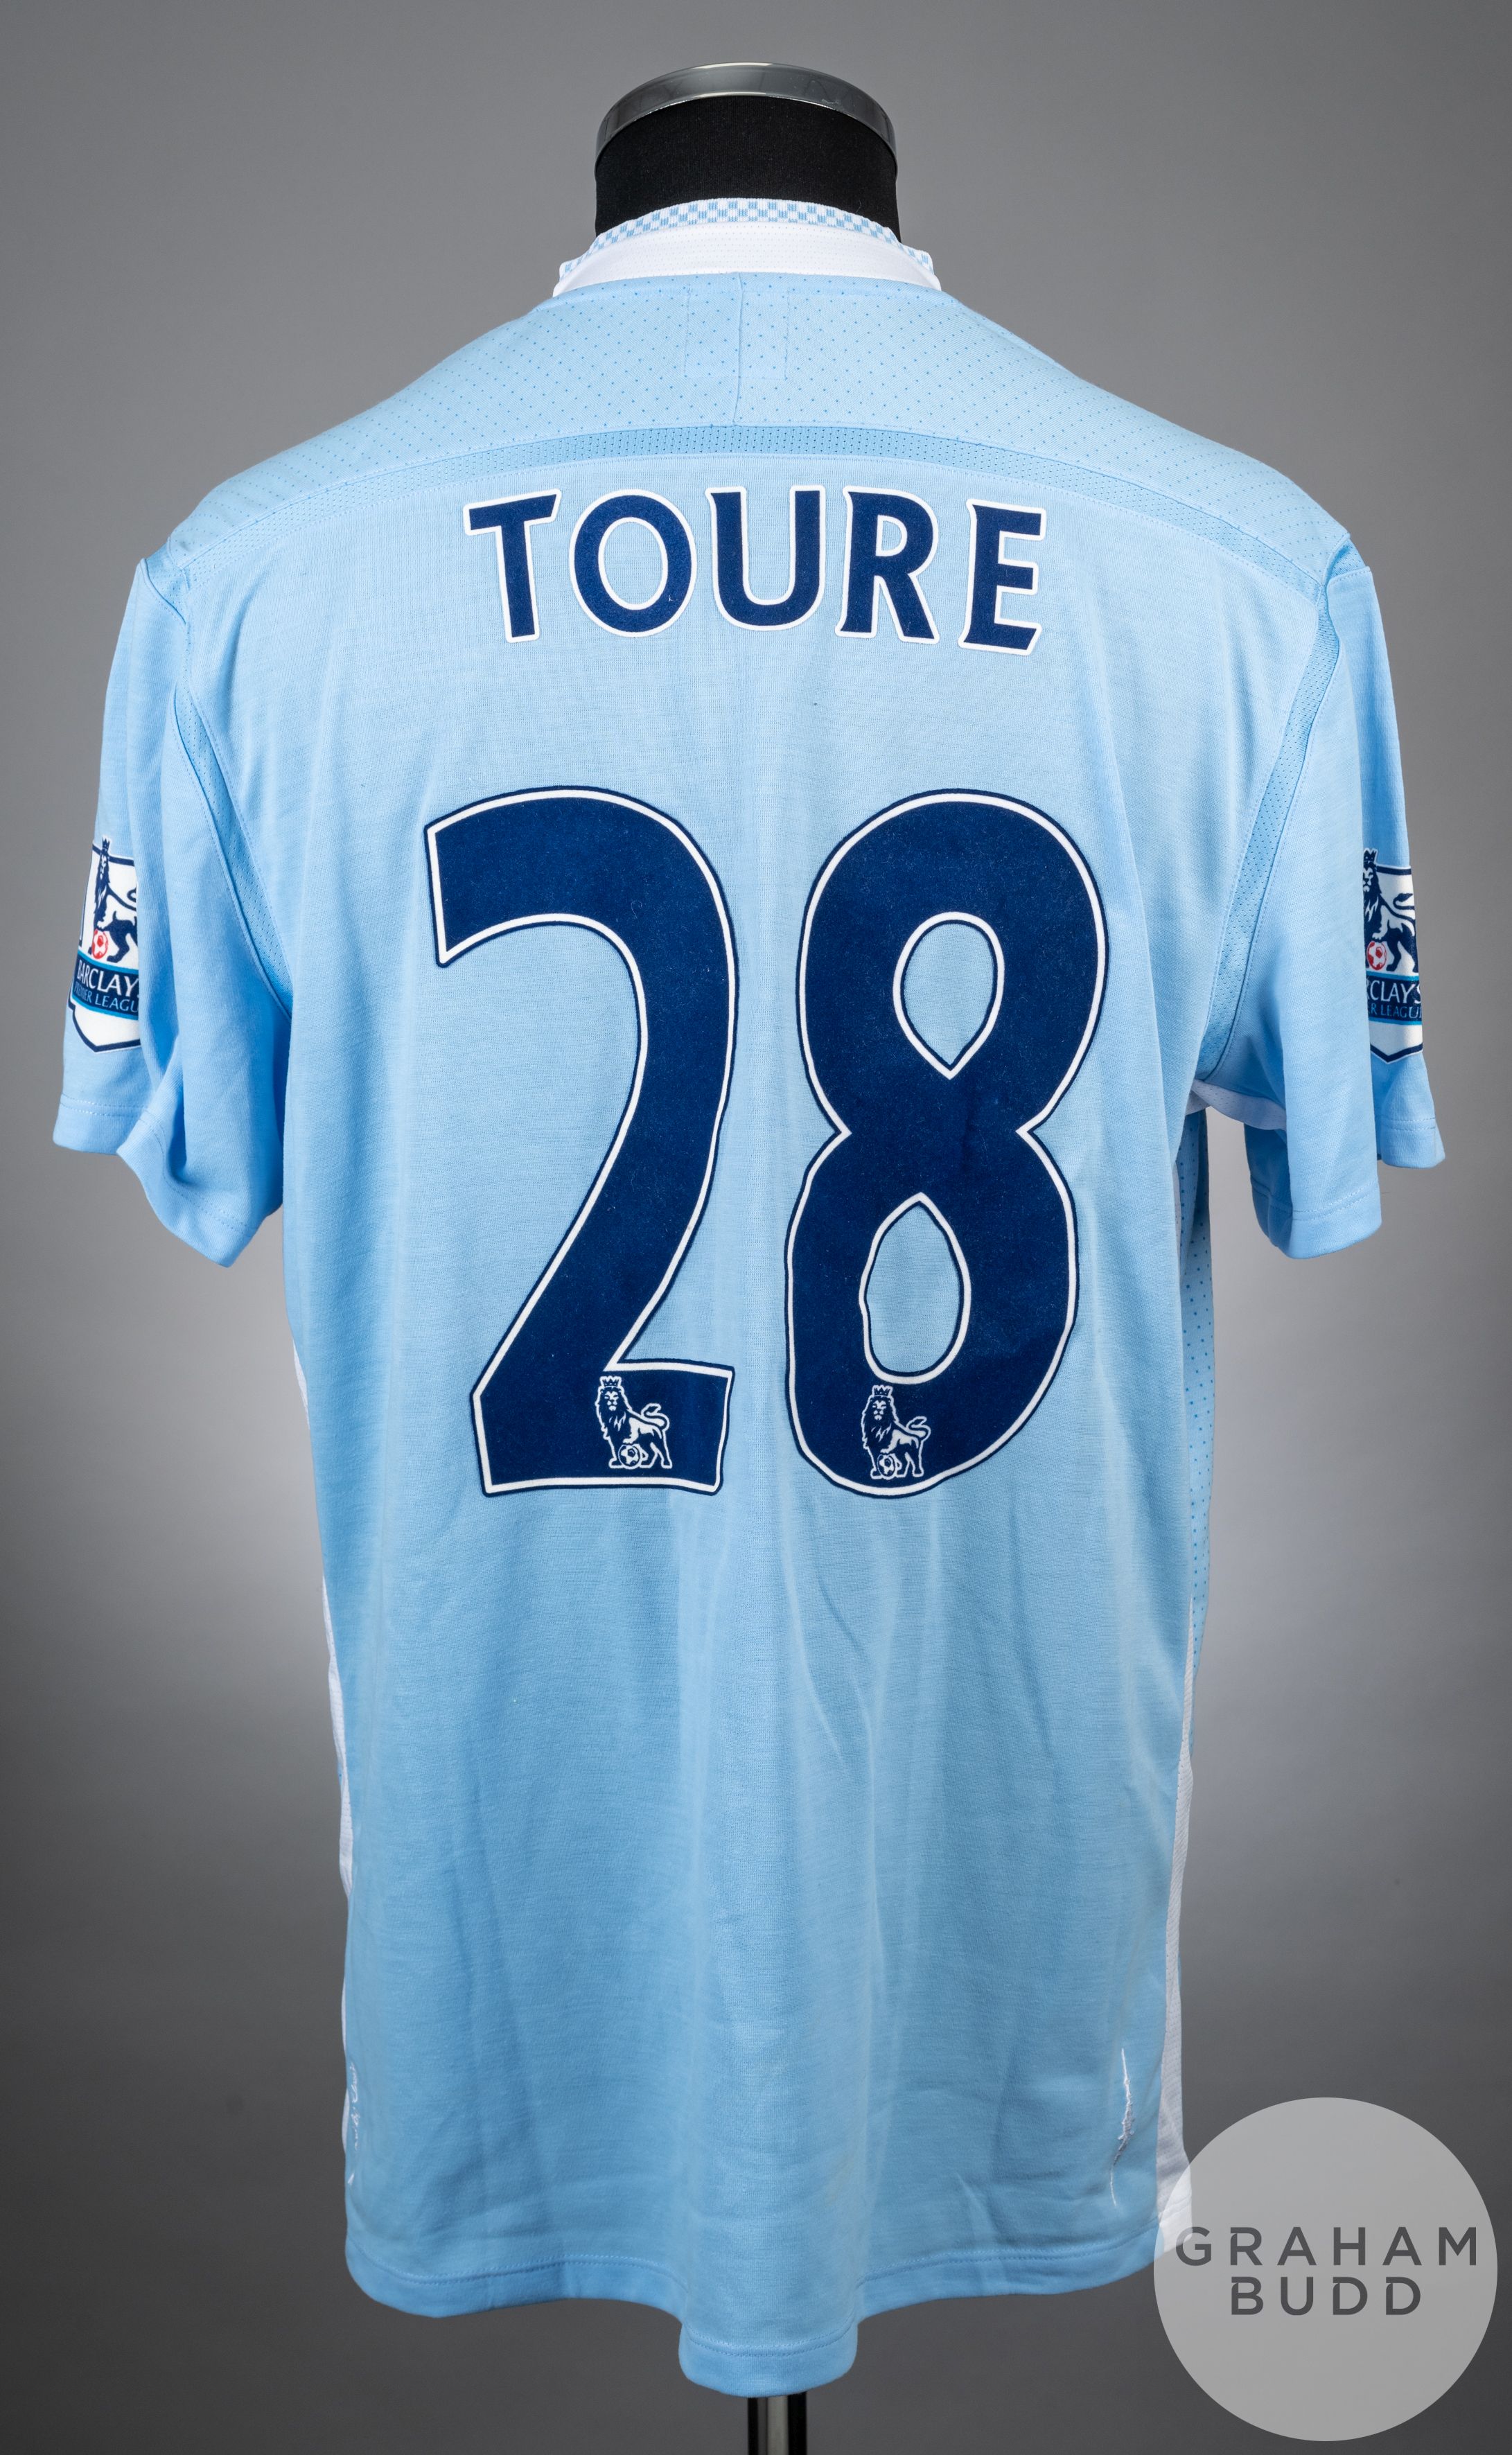 Yaya Toure sky blue No.28 Manchester City short-sleeved shirt, 2011-12 - Image 2 of 2